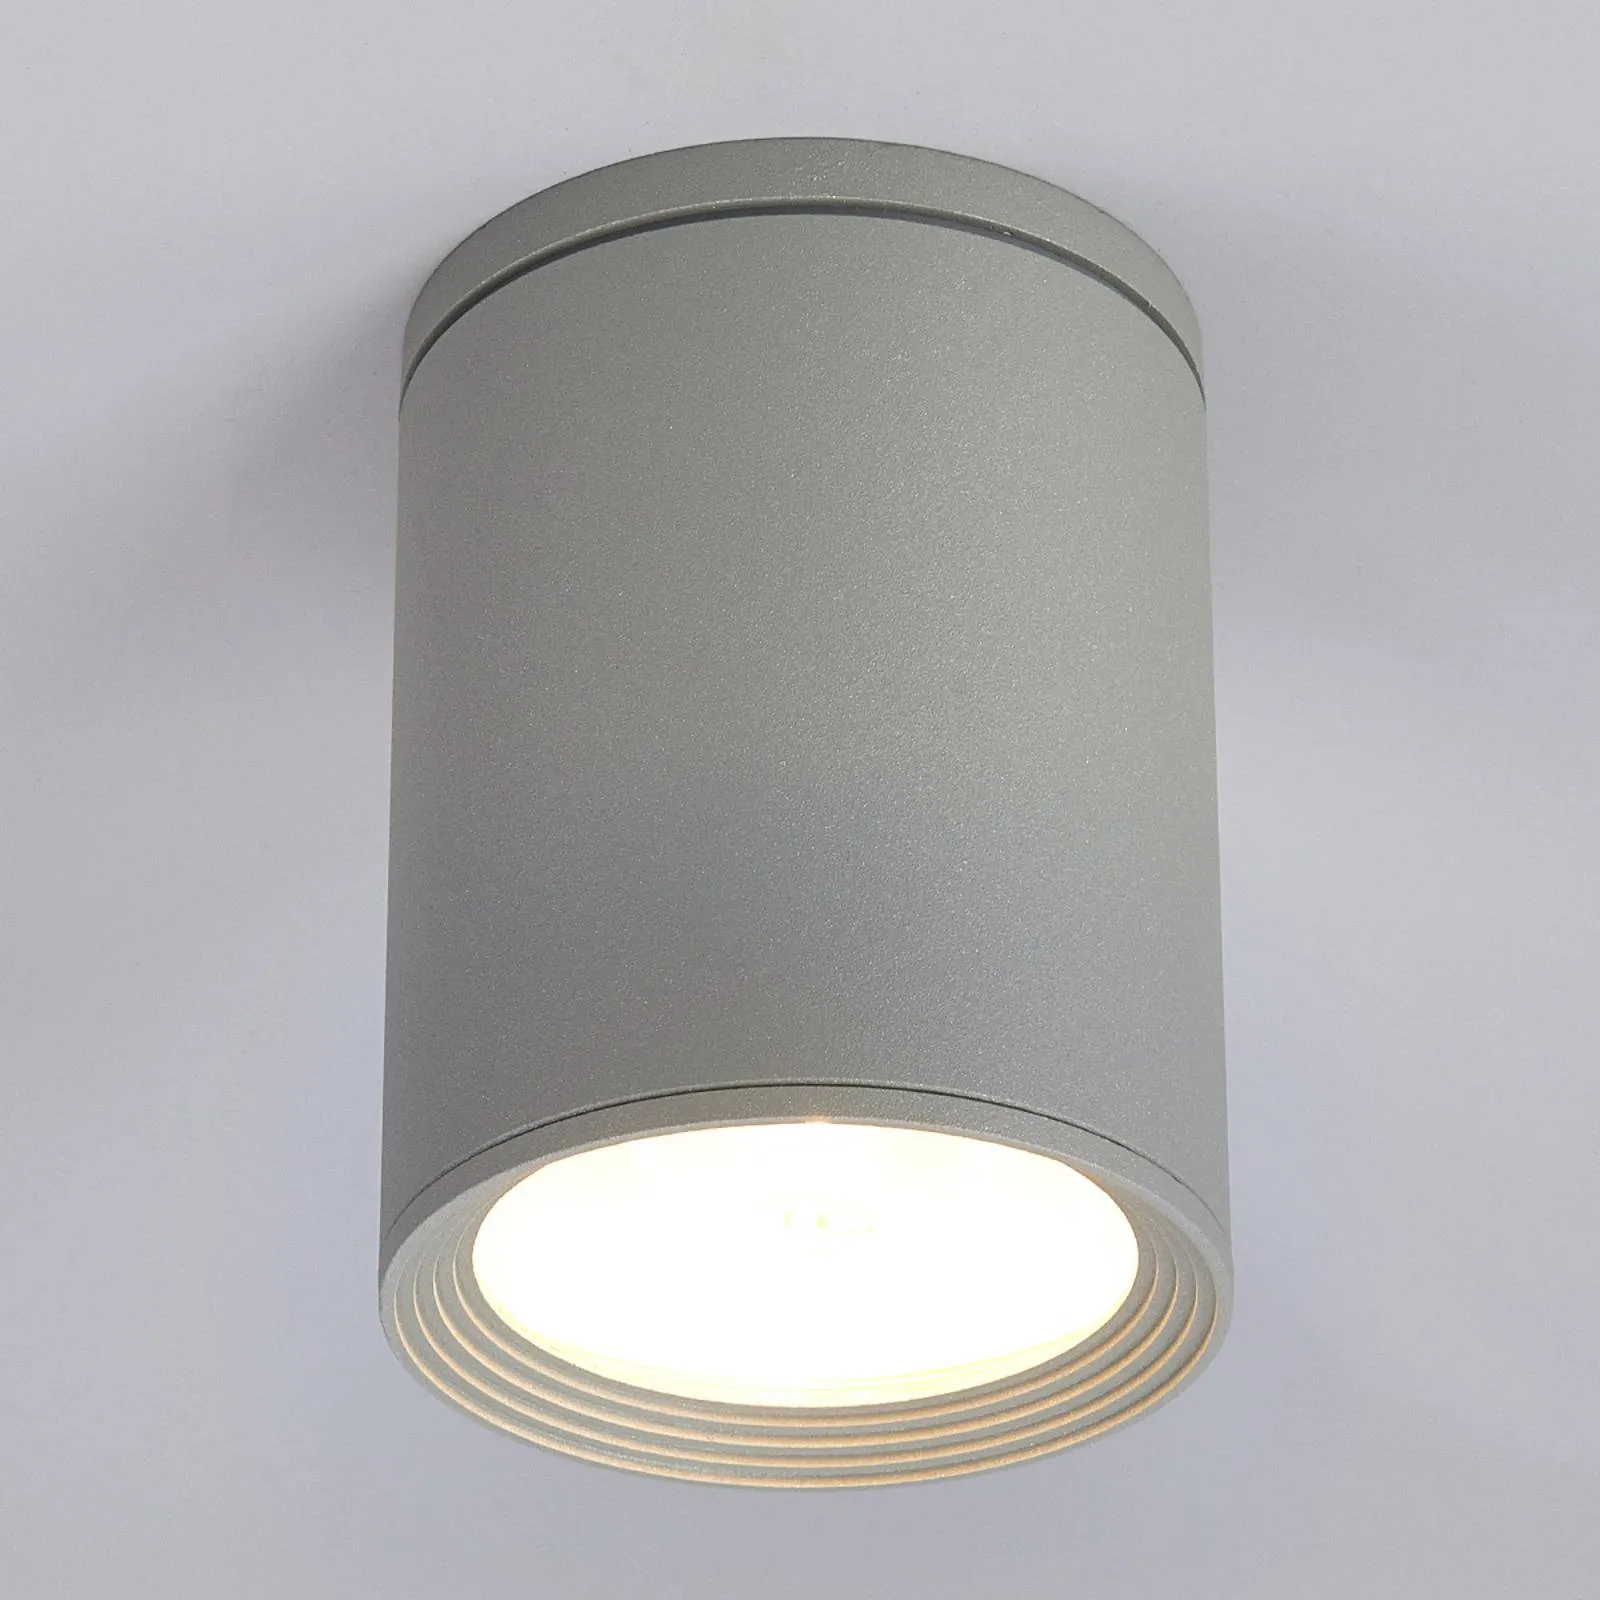 Minna round ceiling light in silver grey